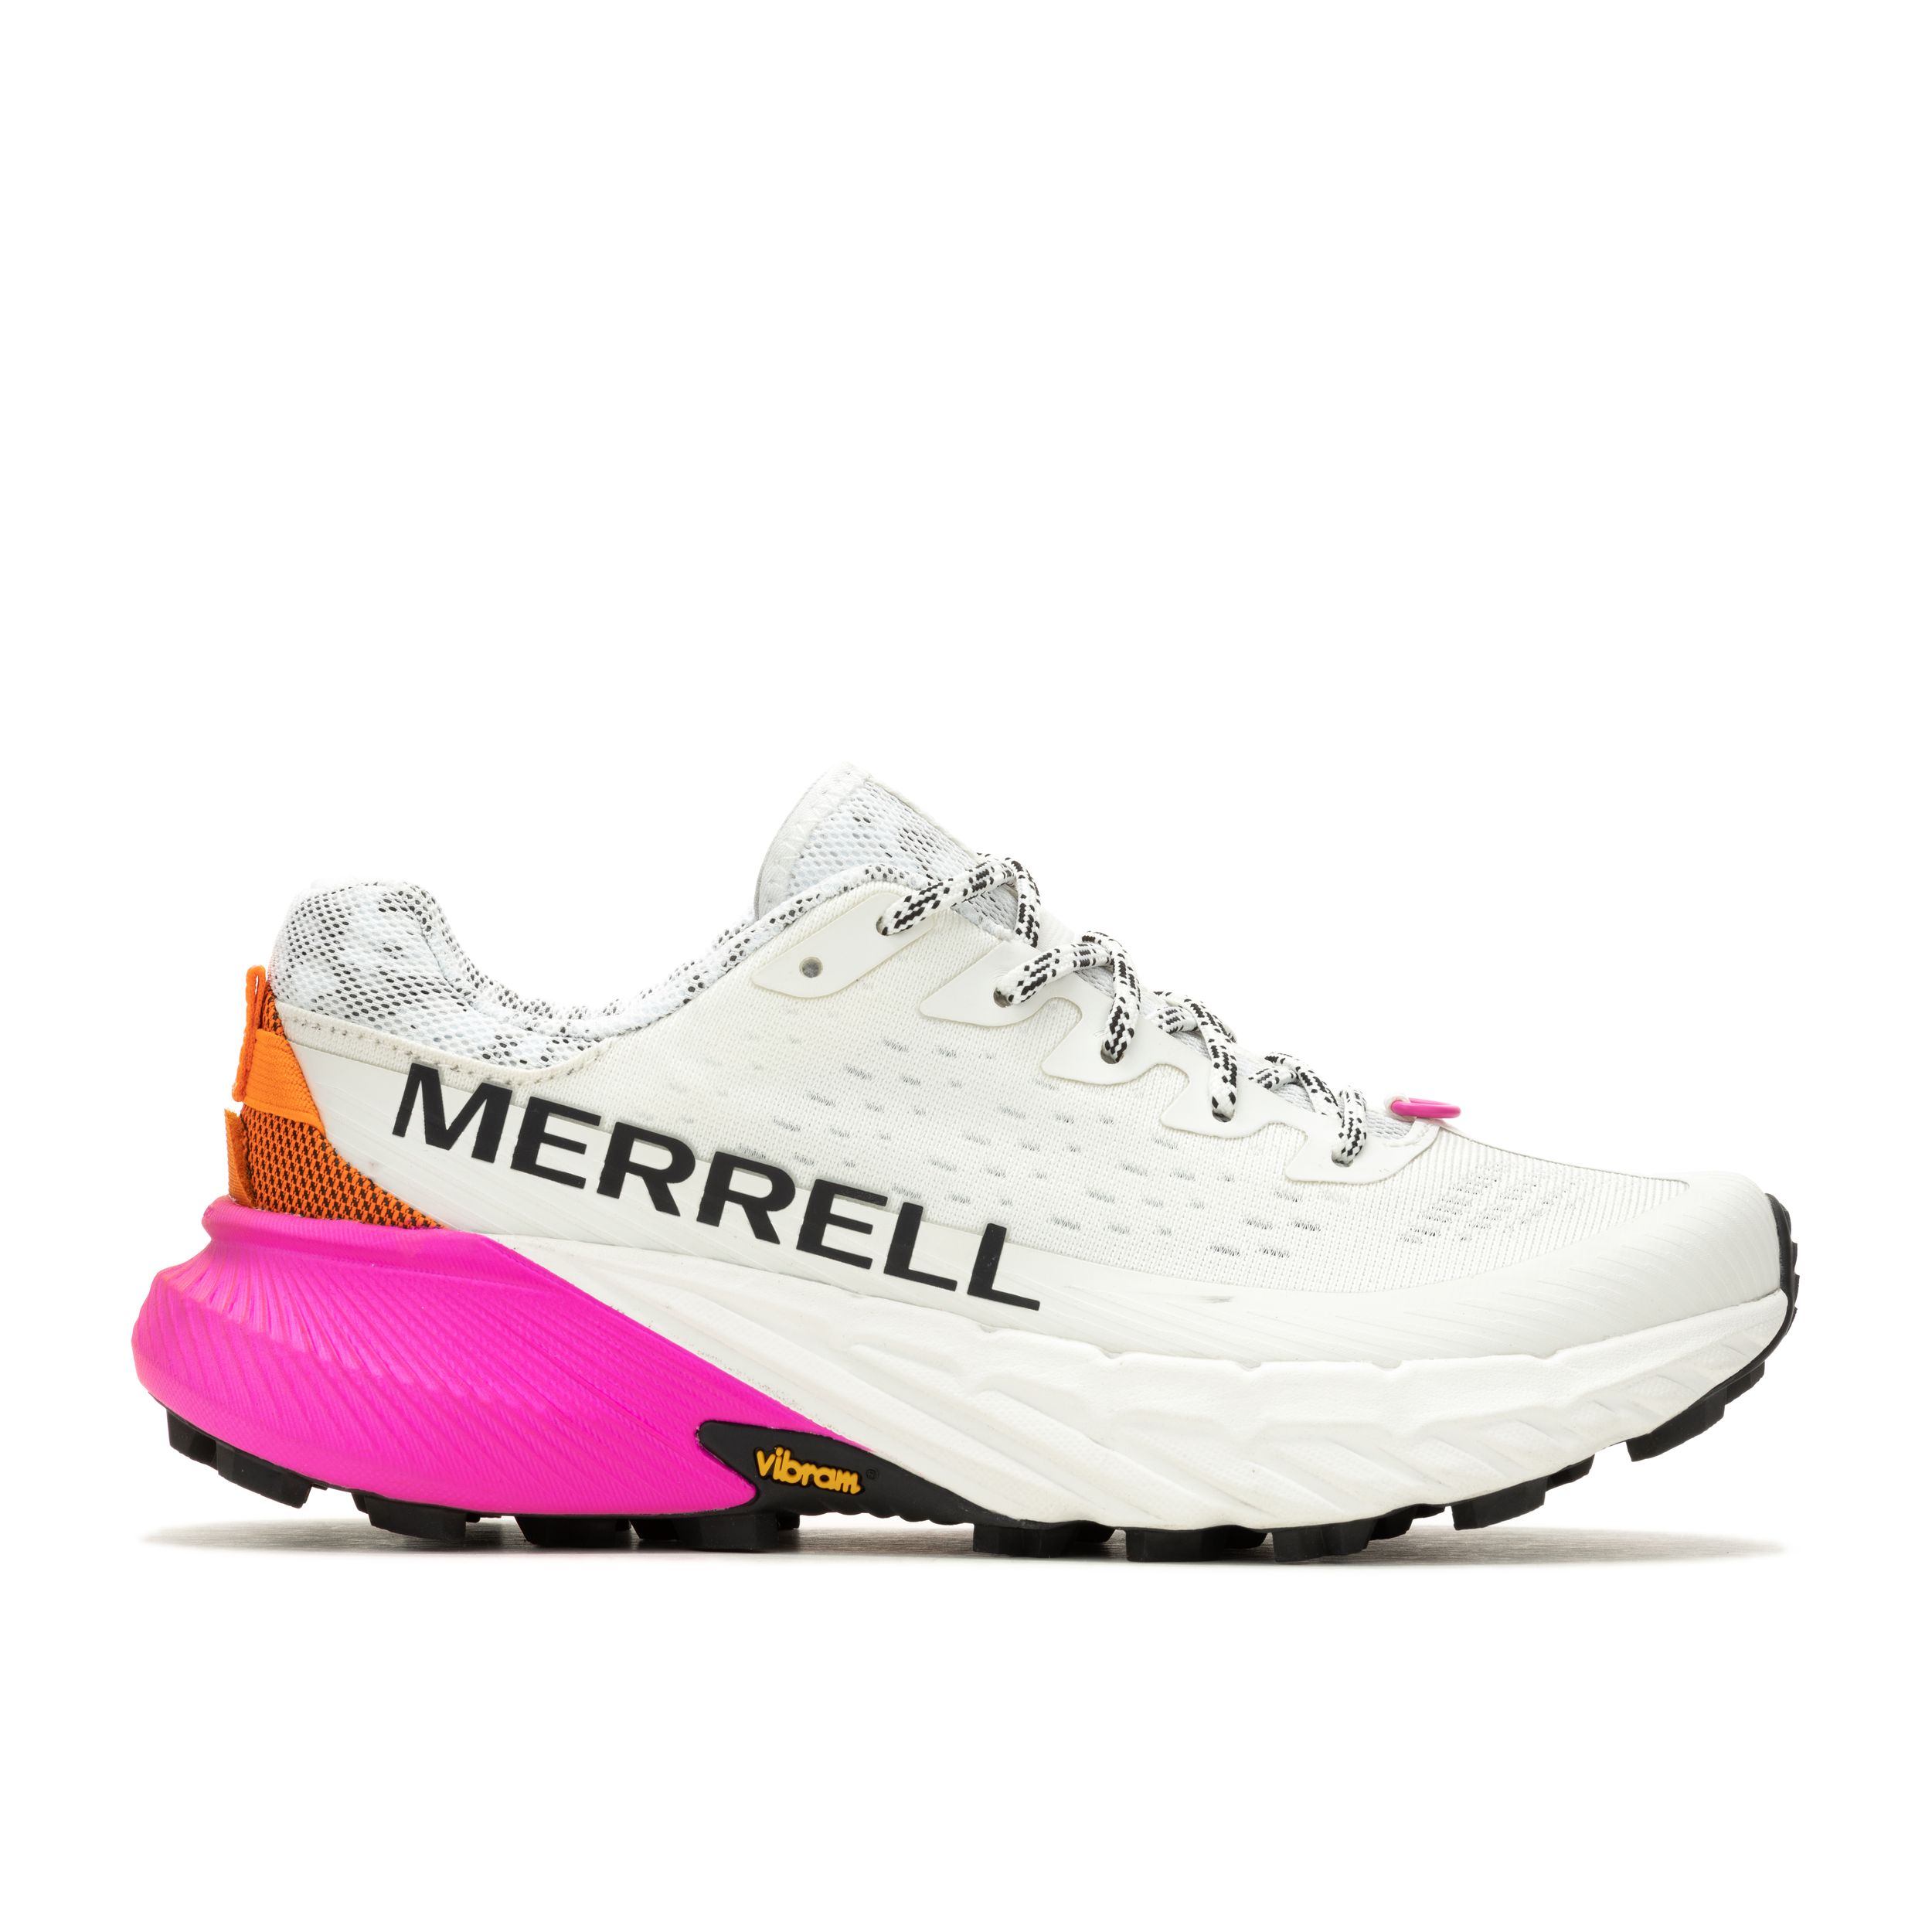 Image of Merrell Women's Agility Peak 5 Trail Running Shoes